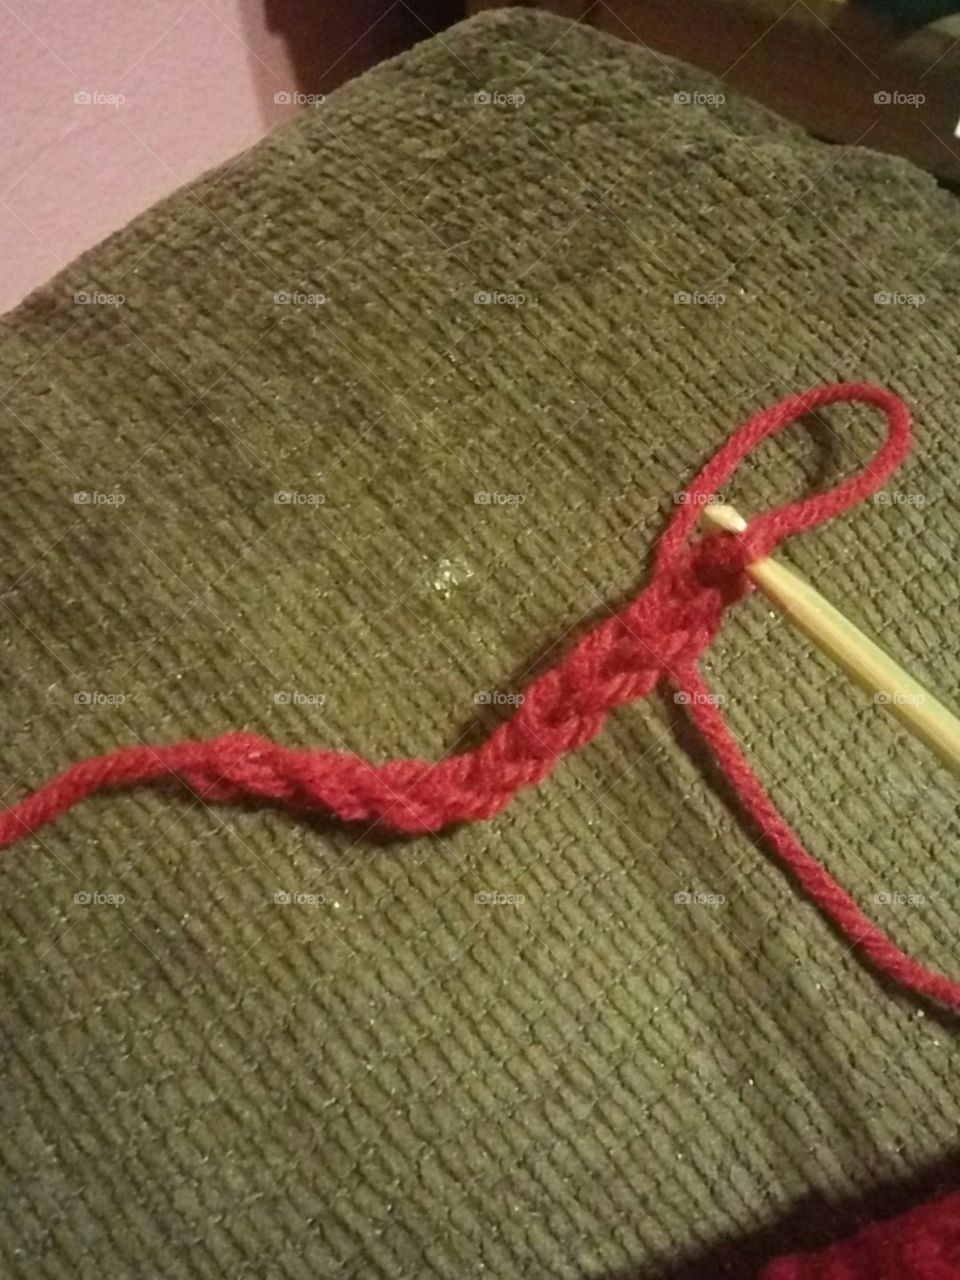 Knitting Chain